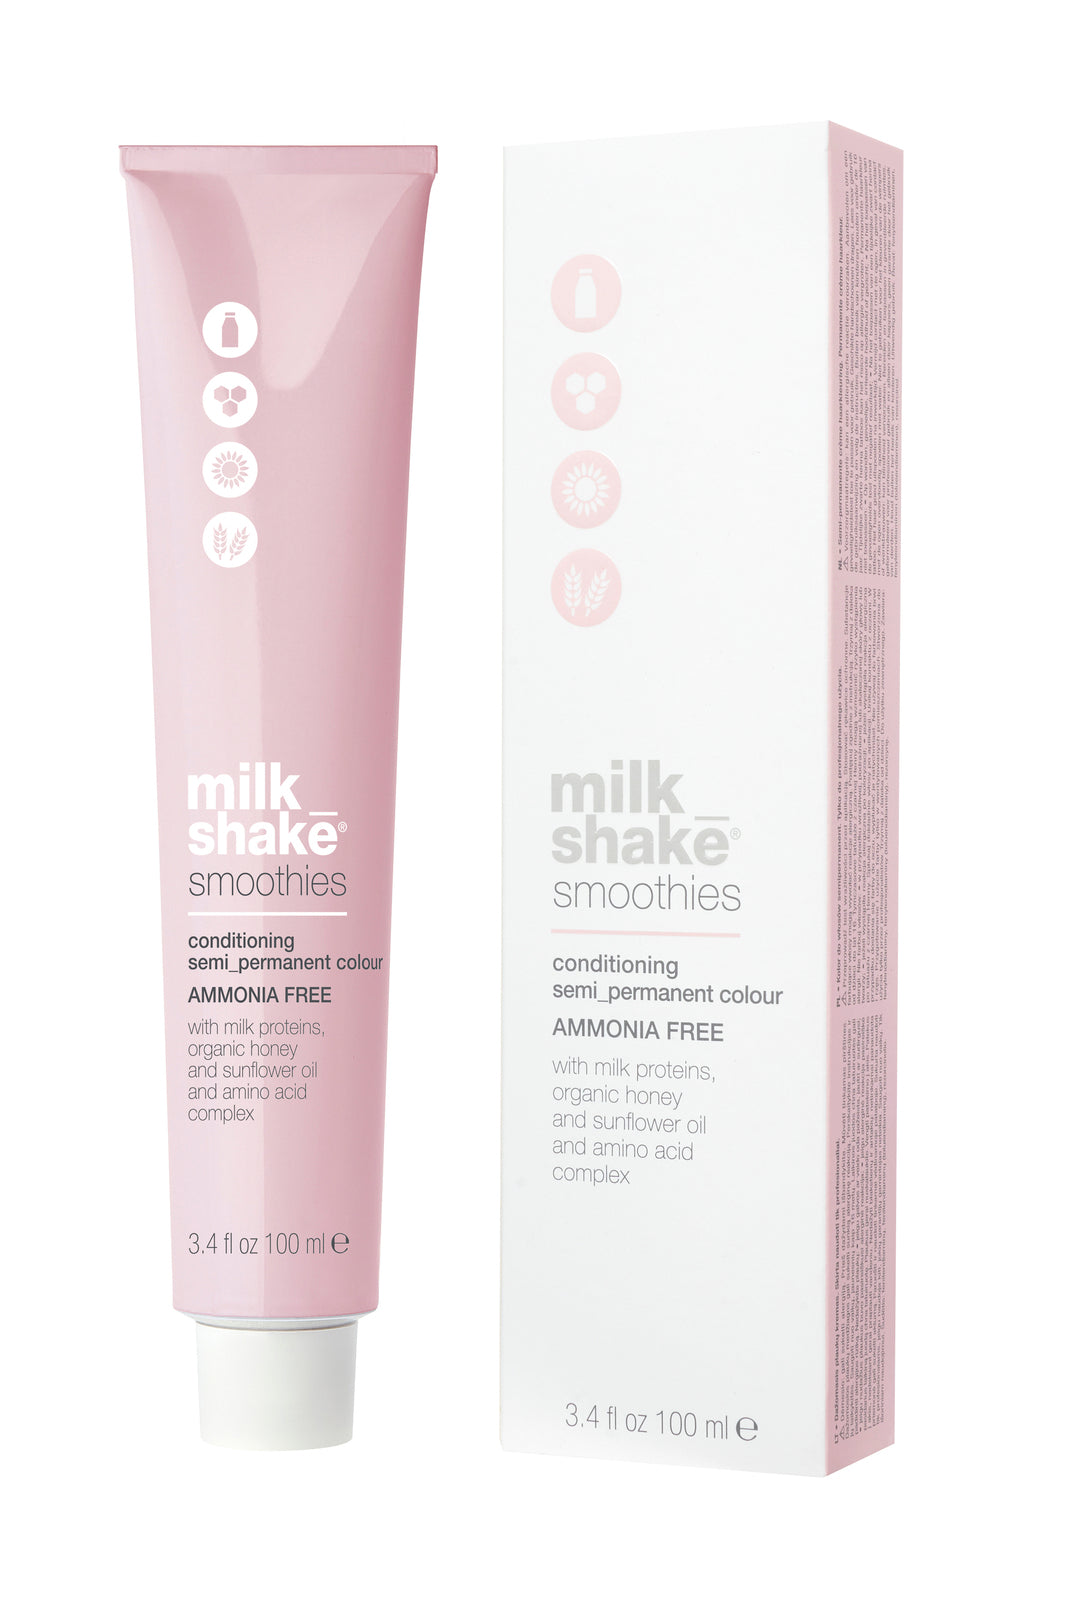 Milkshake smoothies semi-permanent color POWDER